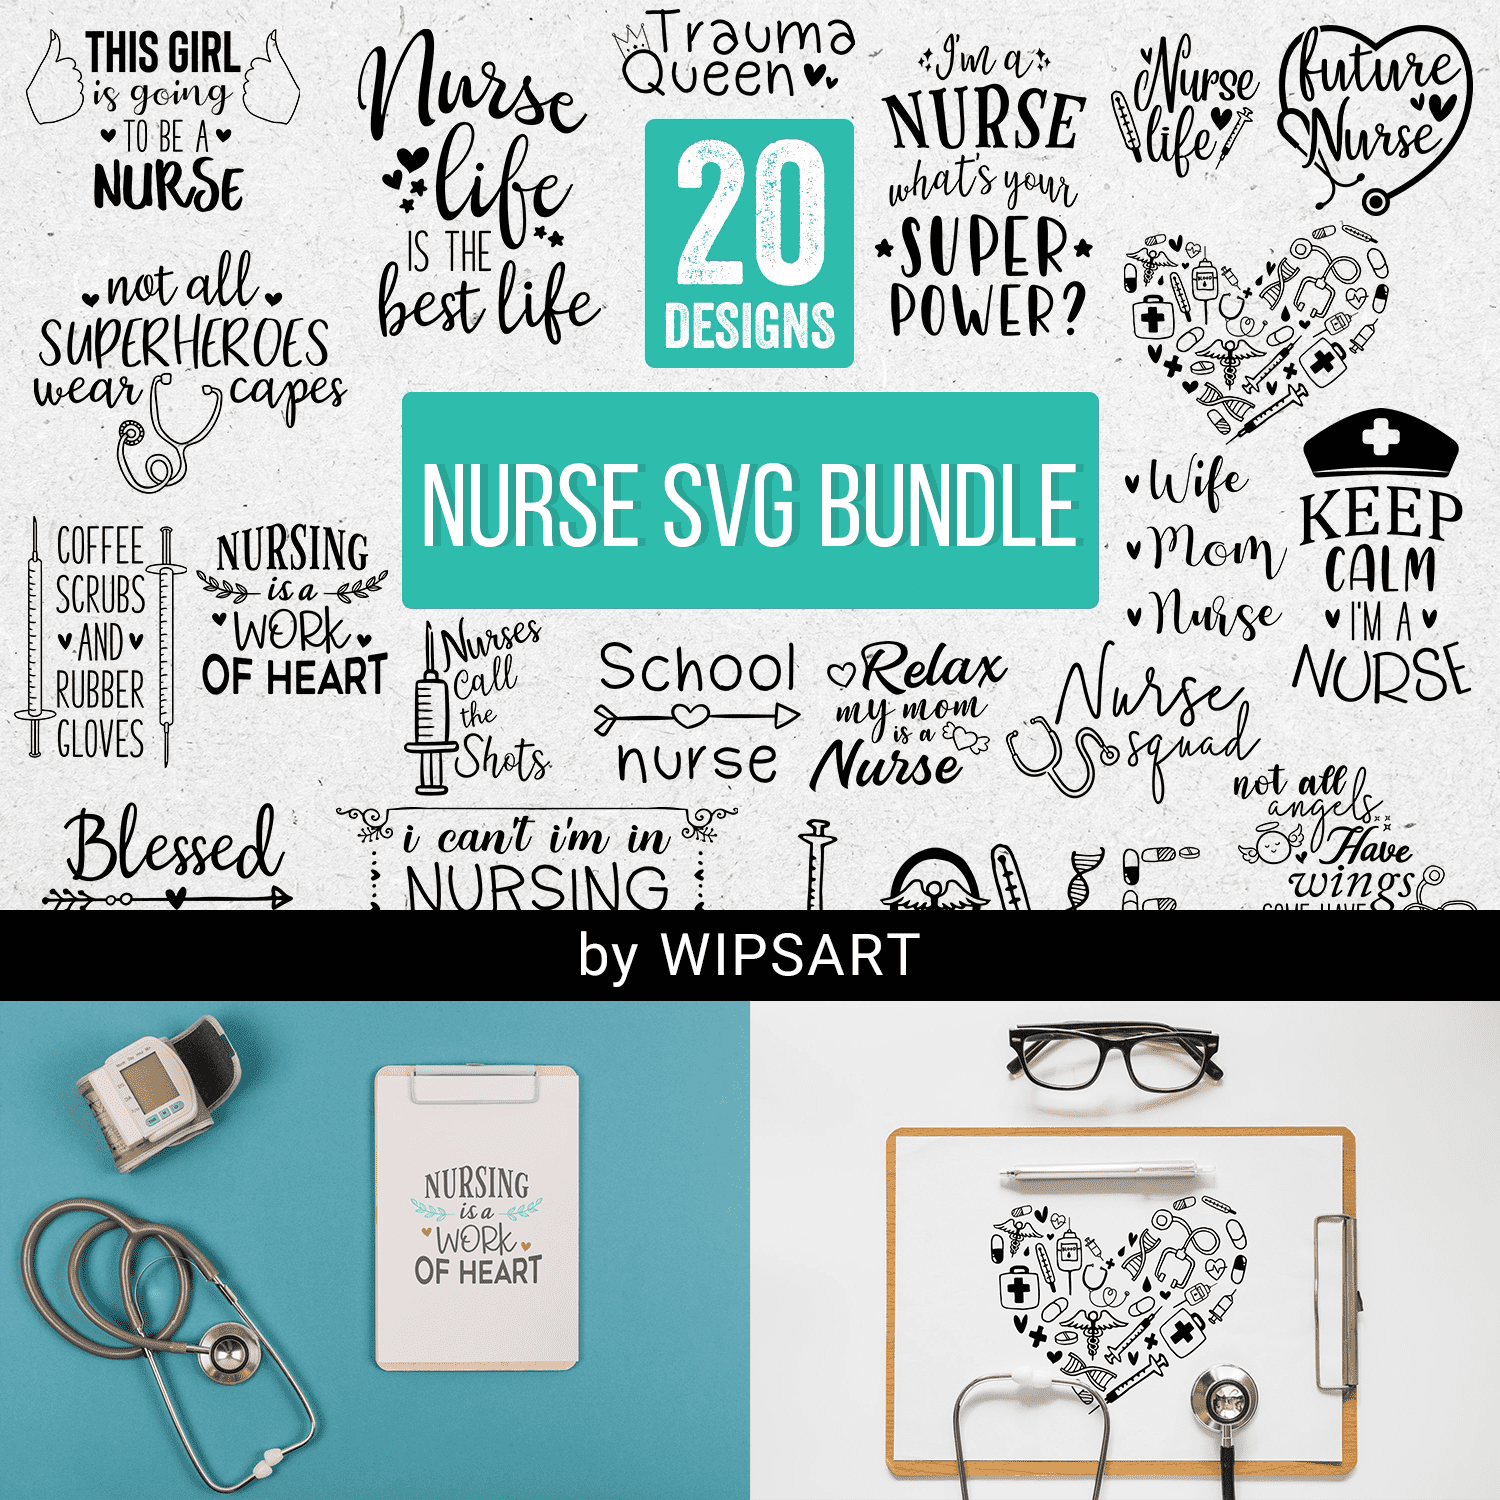 Nurse SVG Bundle cover.